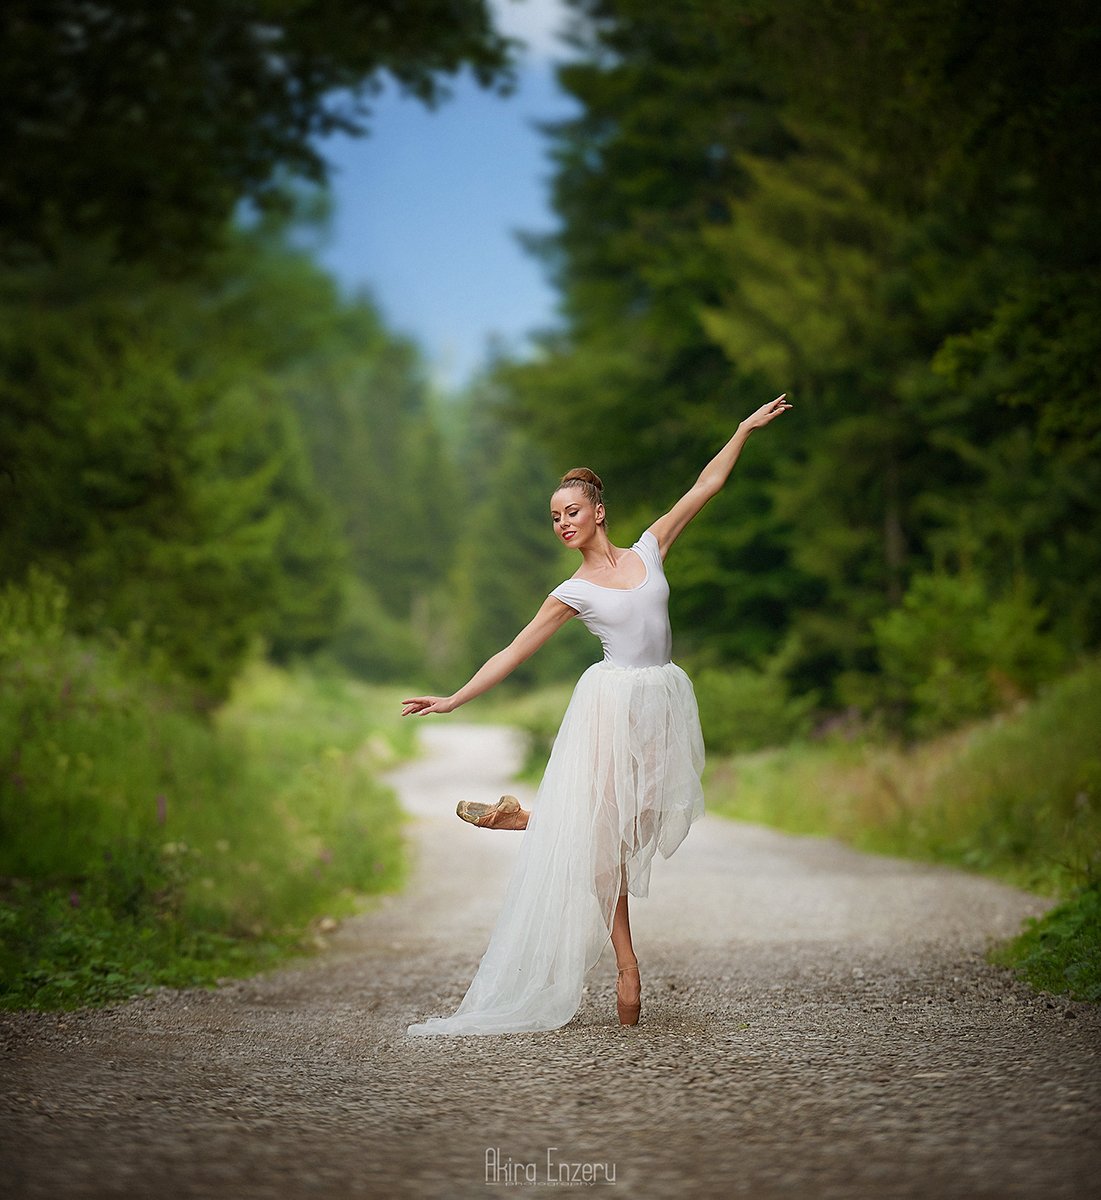 Ballerina, Ballet, Dance, Dancer, Nature, Portrait, Woods, Enzeru Akira